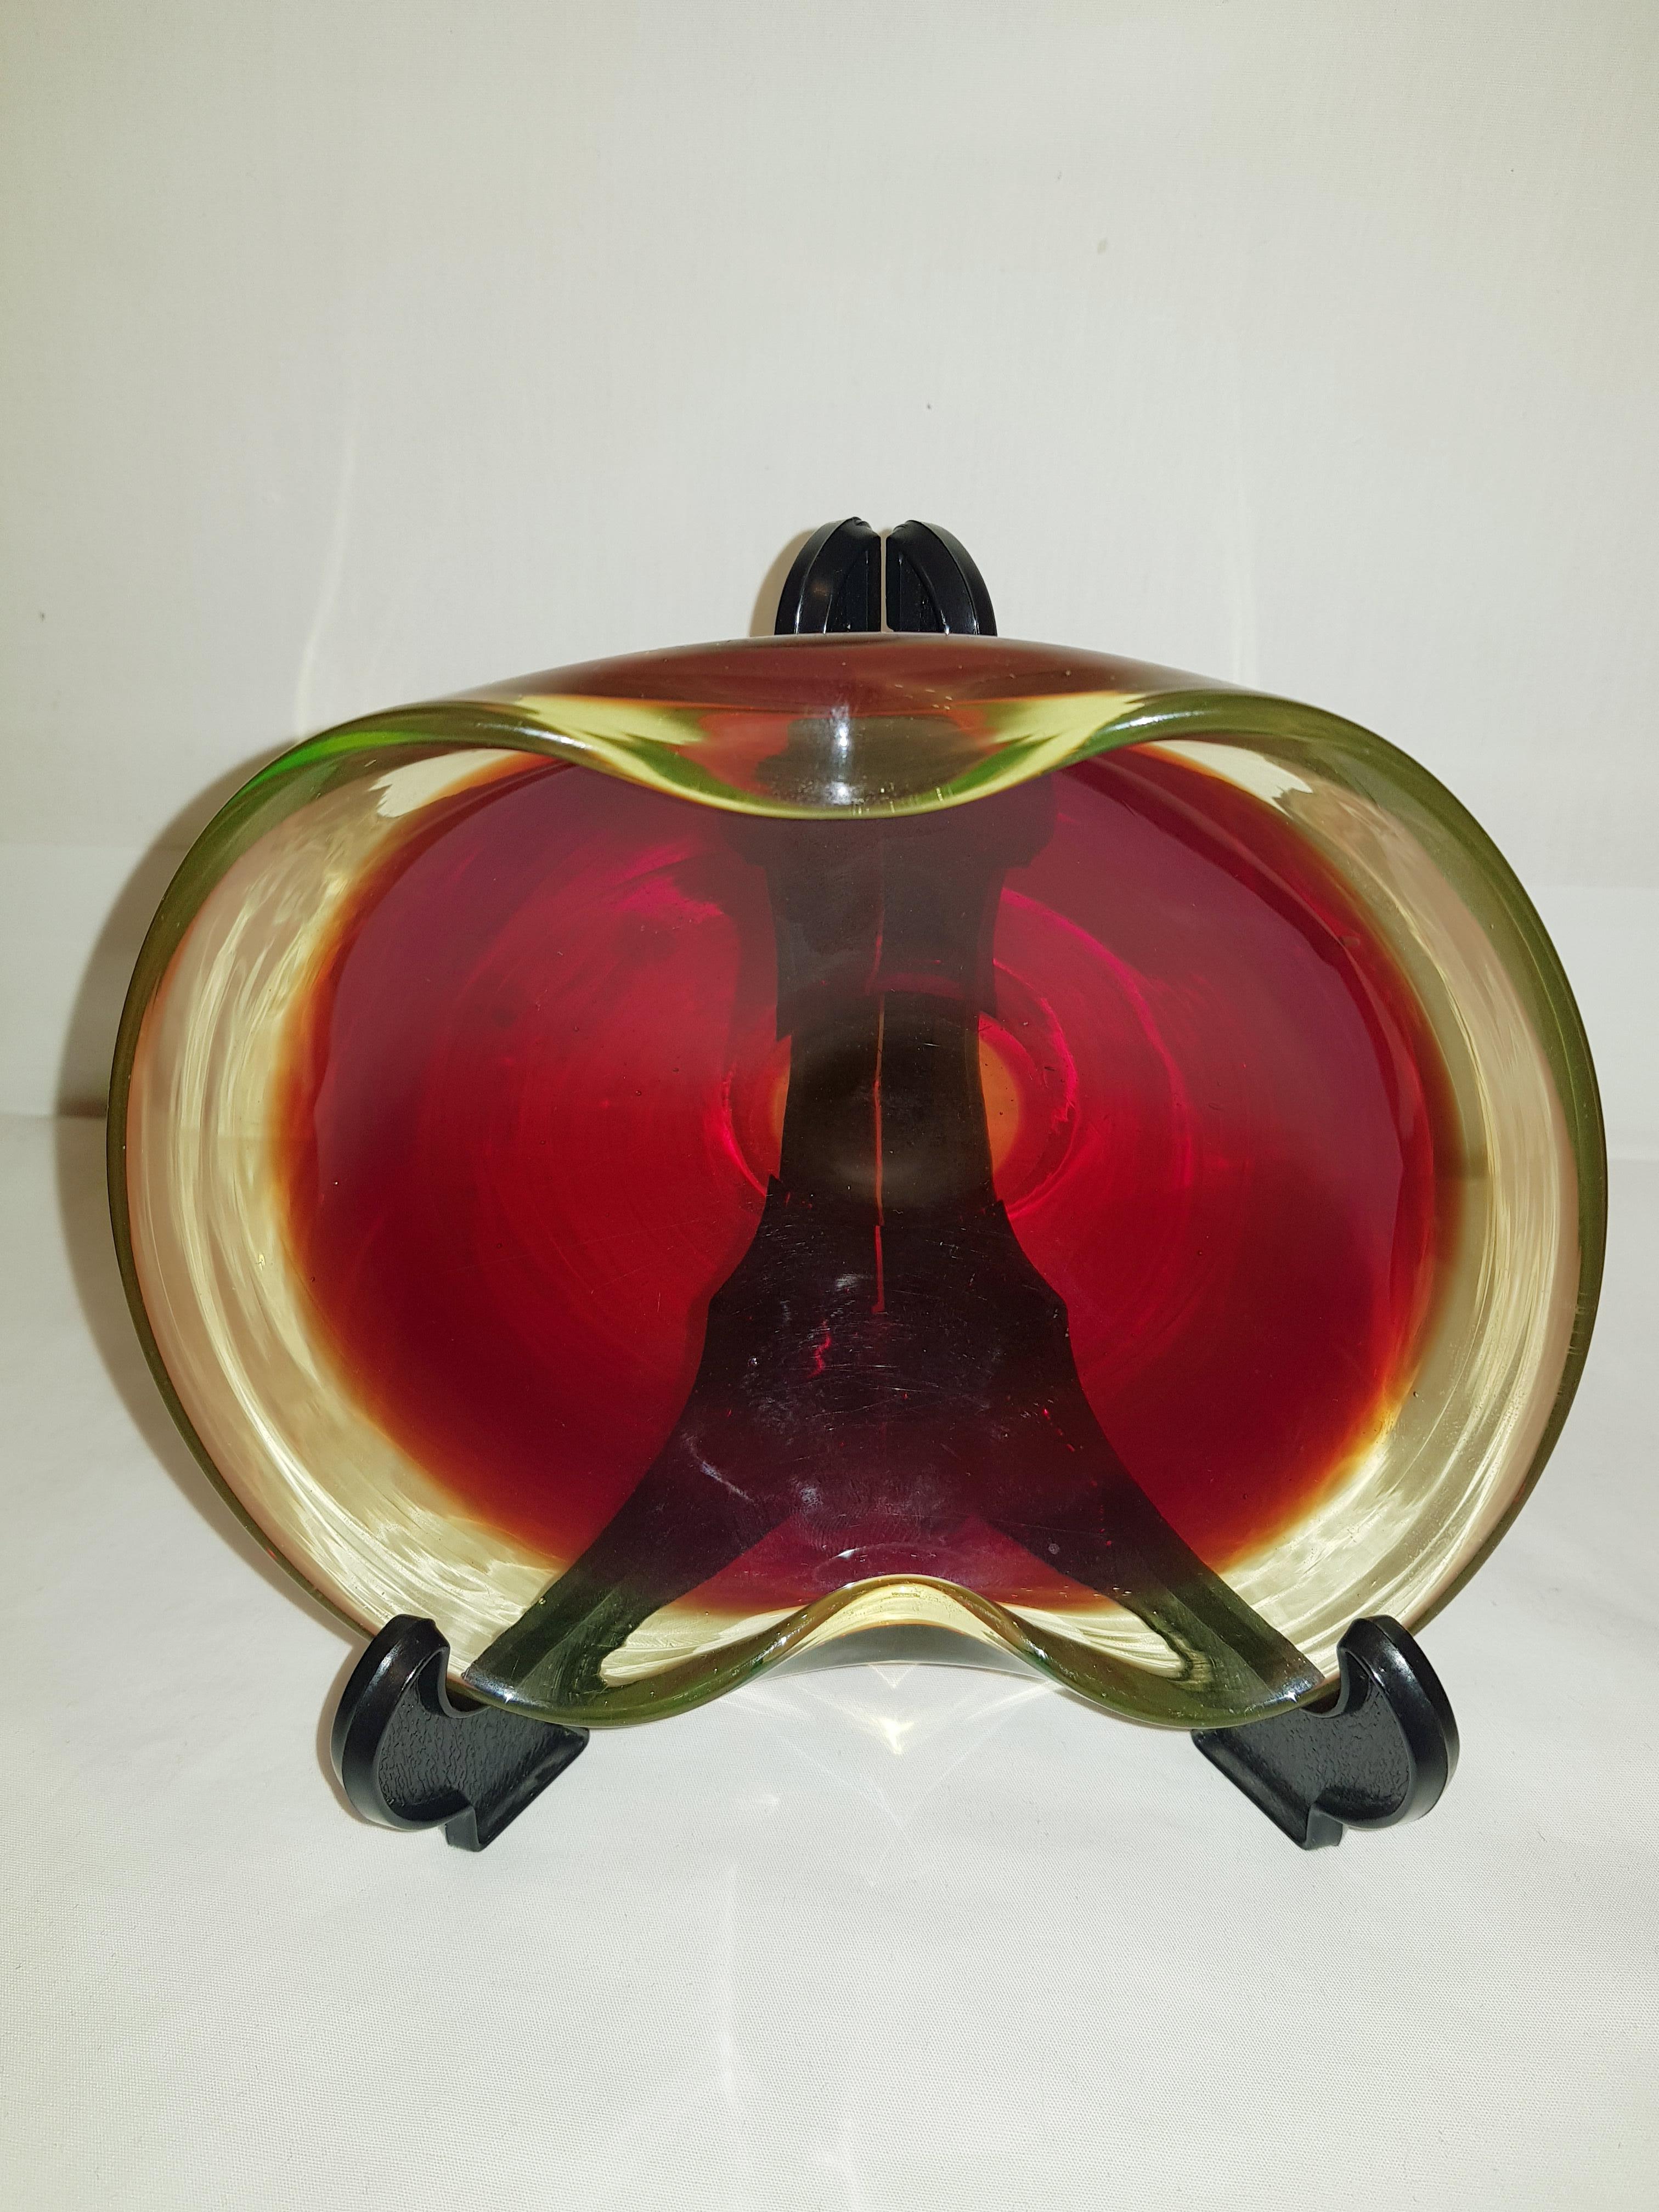 Beautiful middle of century murano glass somerso uranium bowl, red and uranium, by Antonio da Ros brilliant condition.